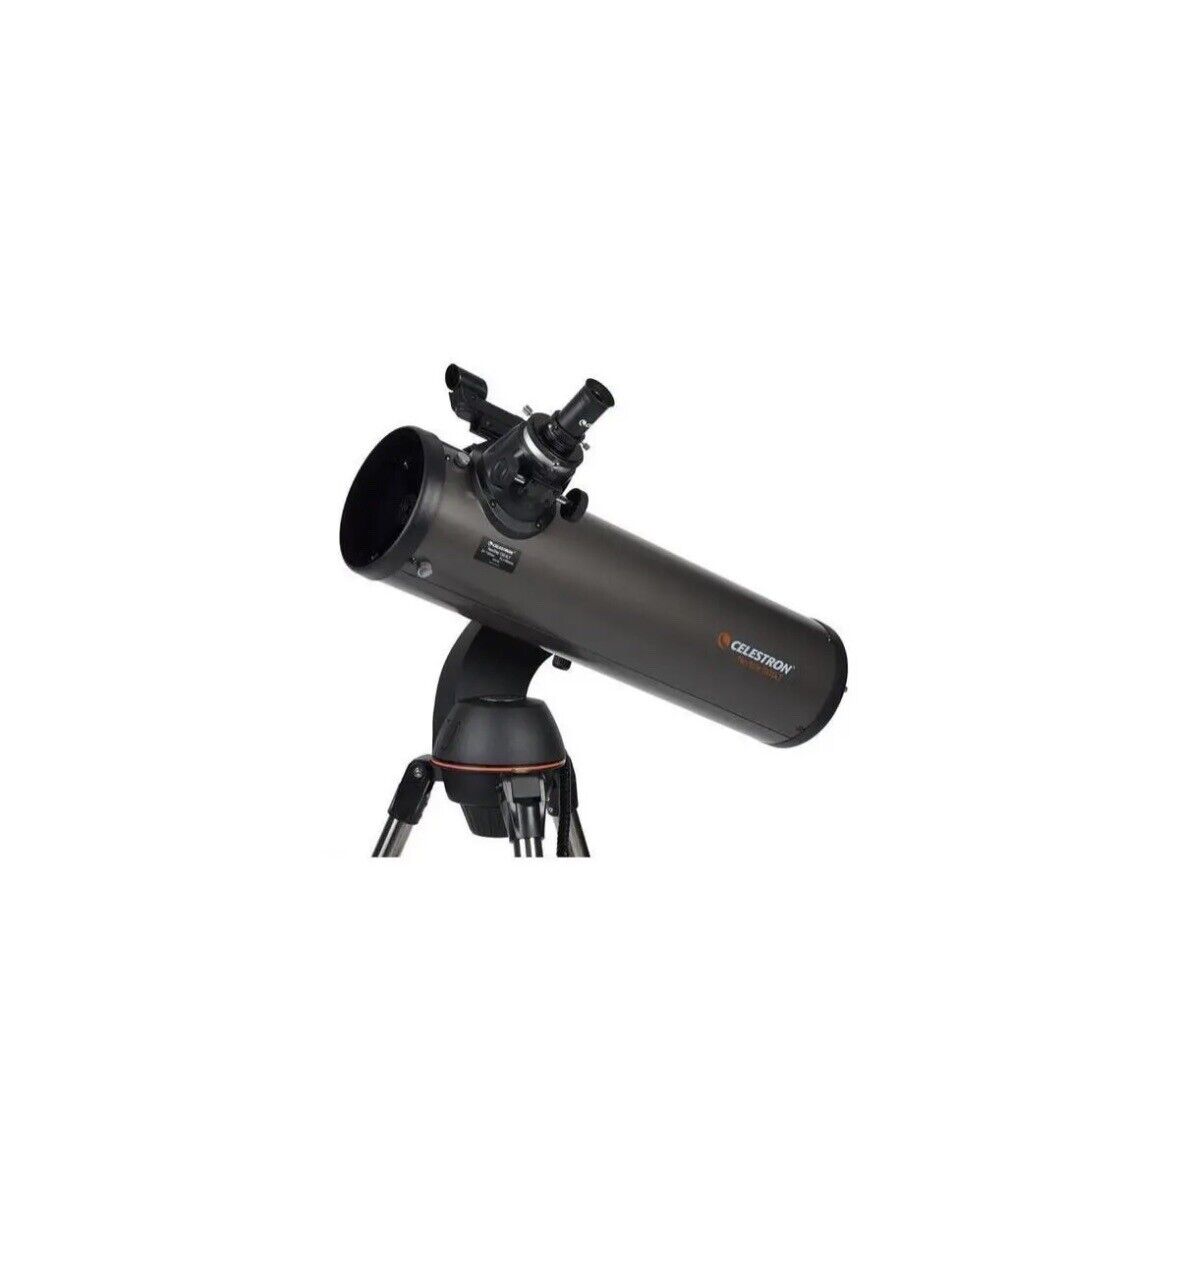 Celestron NexStar 130 SLT 130mm Newtonian Reflector Telescope #31145